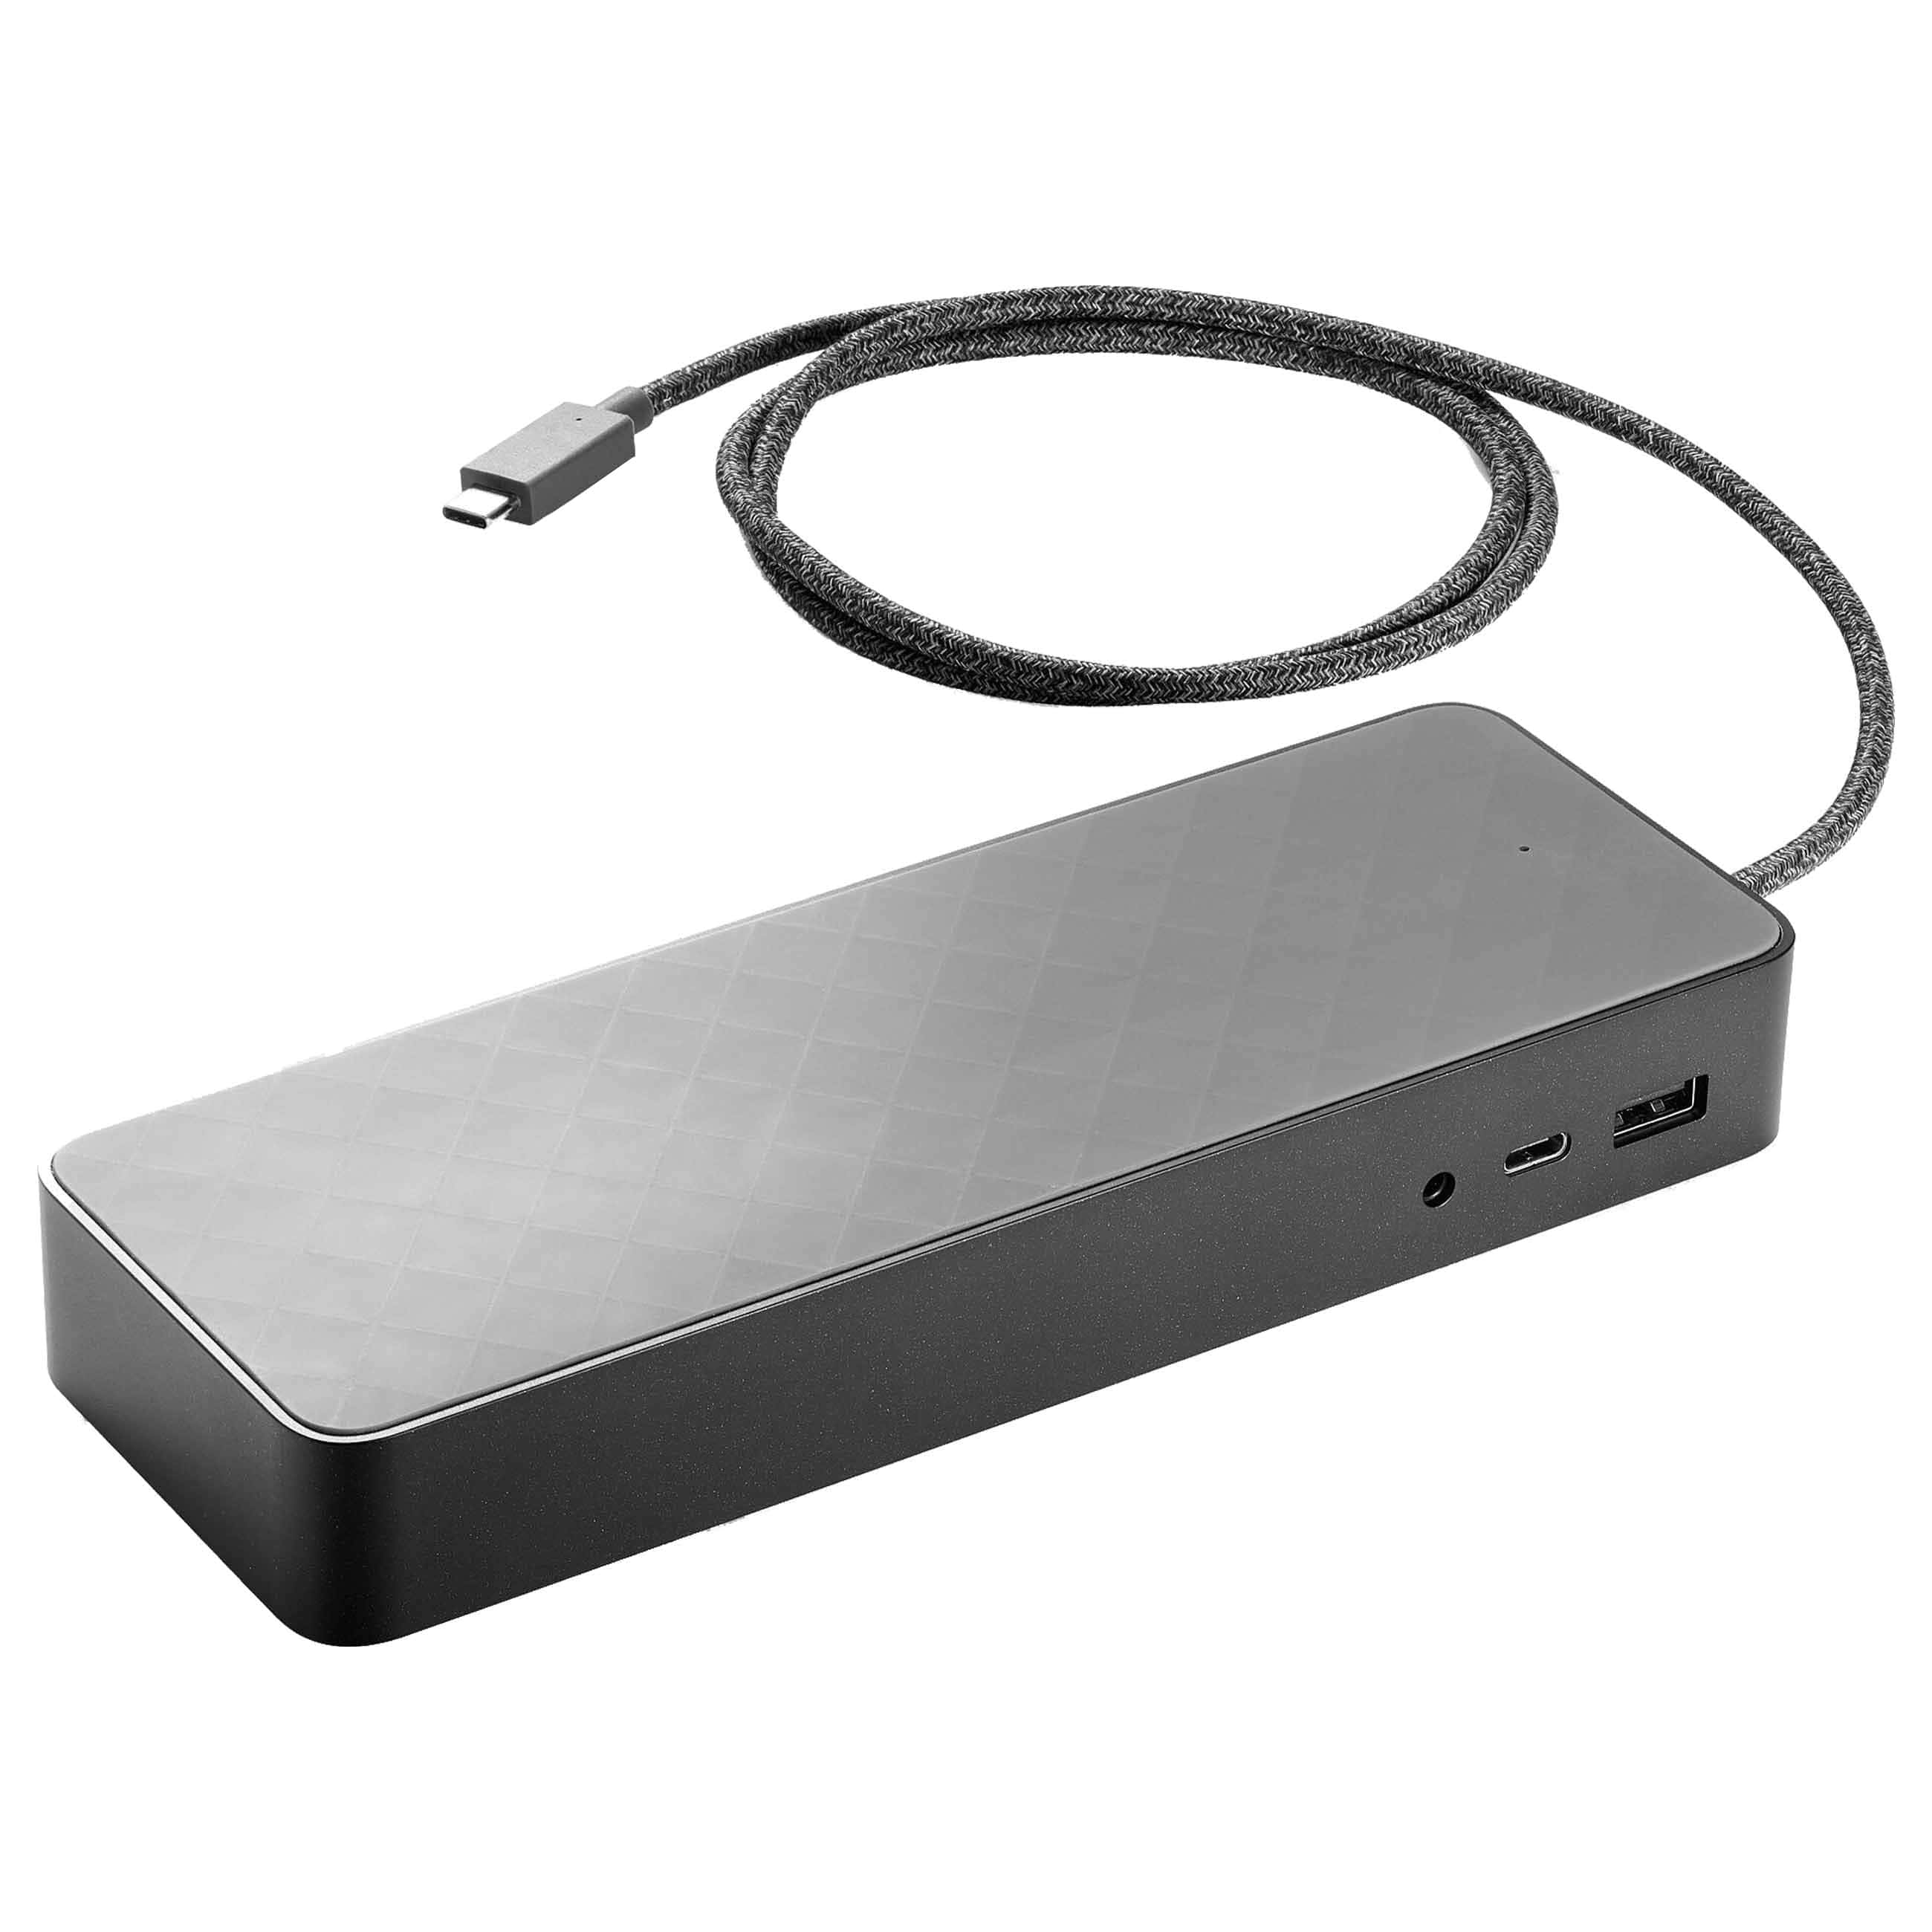 HP USB-C Universal Dock (1MK33AA)